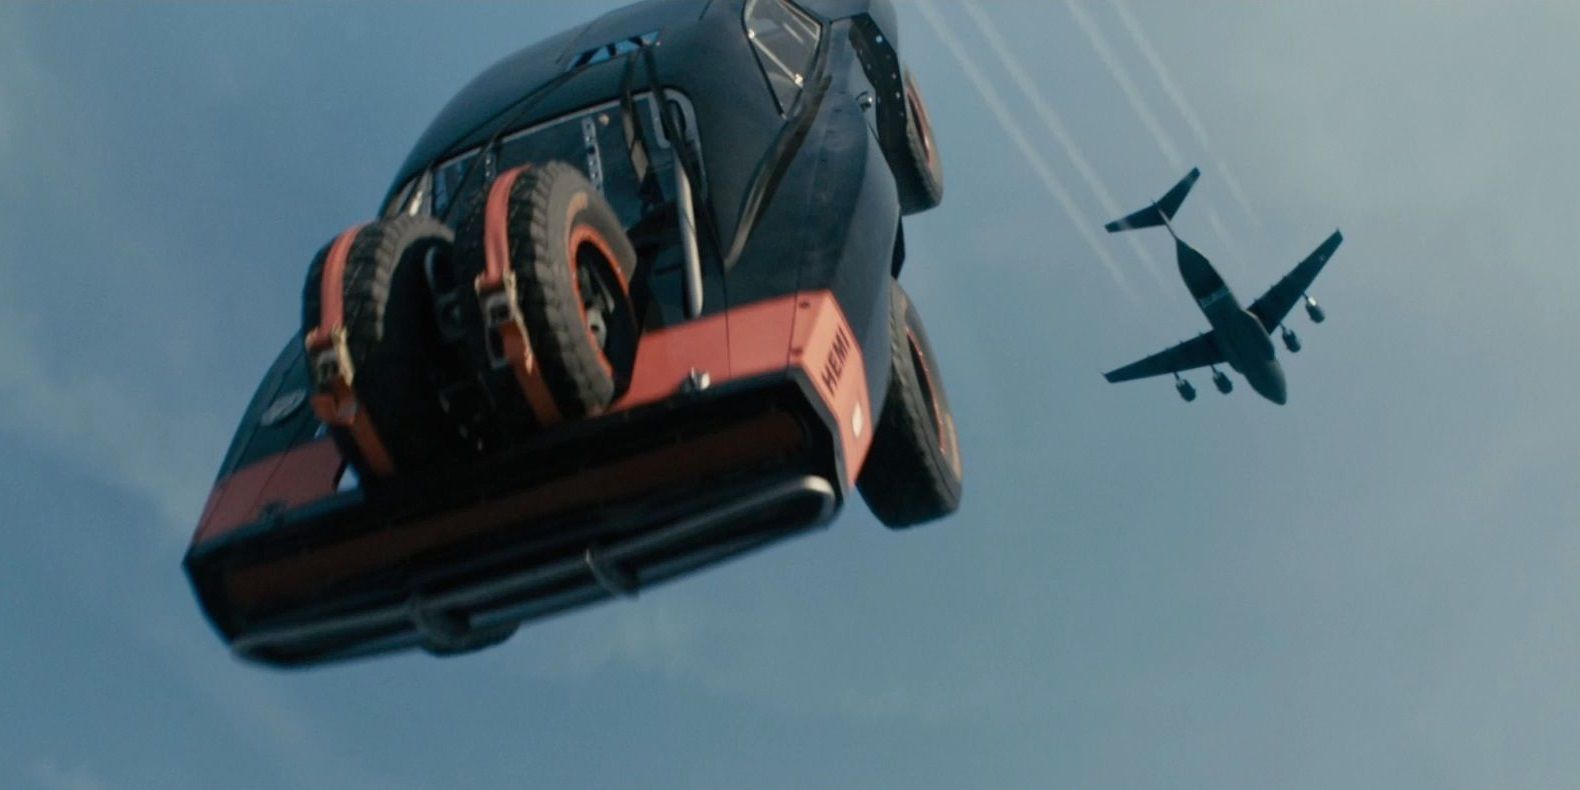 Skydiving cars in Furious 7